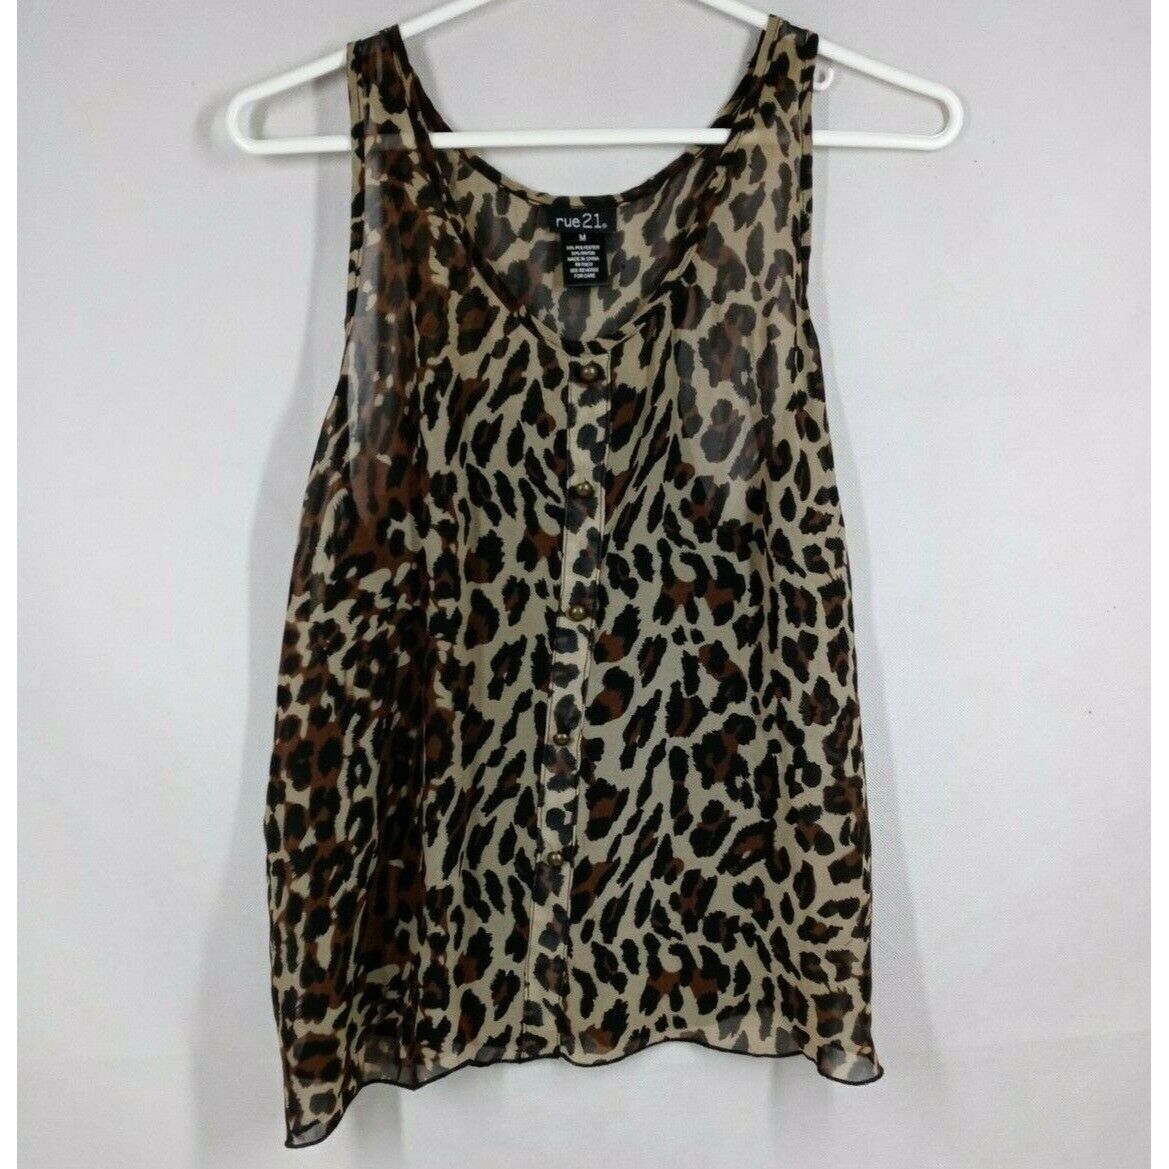 Primary image for Rue 21 Women's Leopard Print Sleeveless Sheer Blouse Size Medium